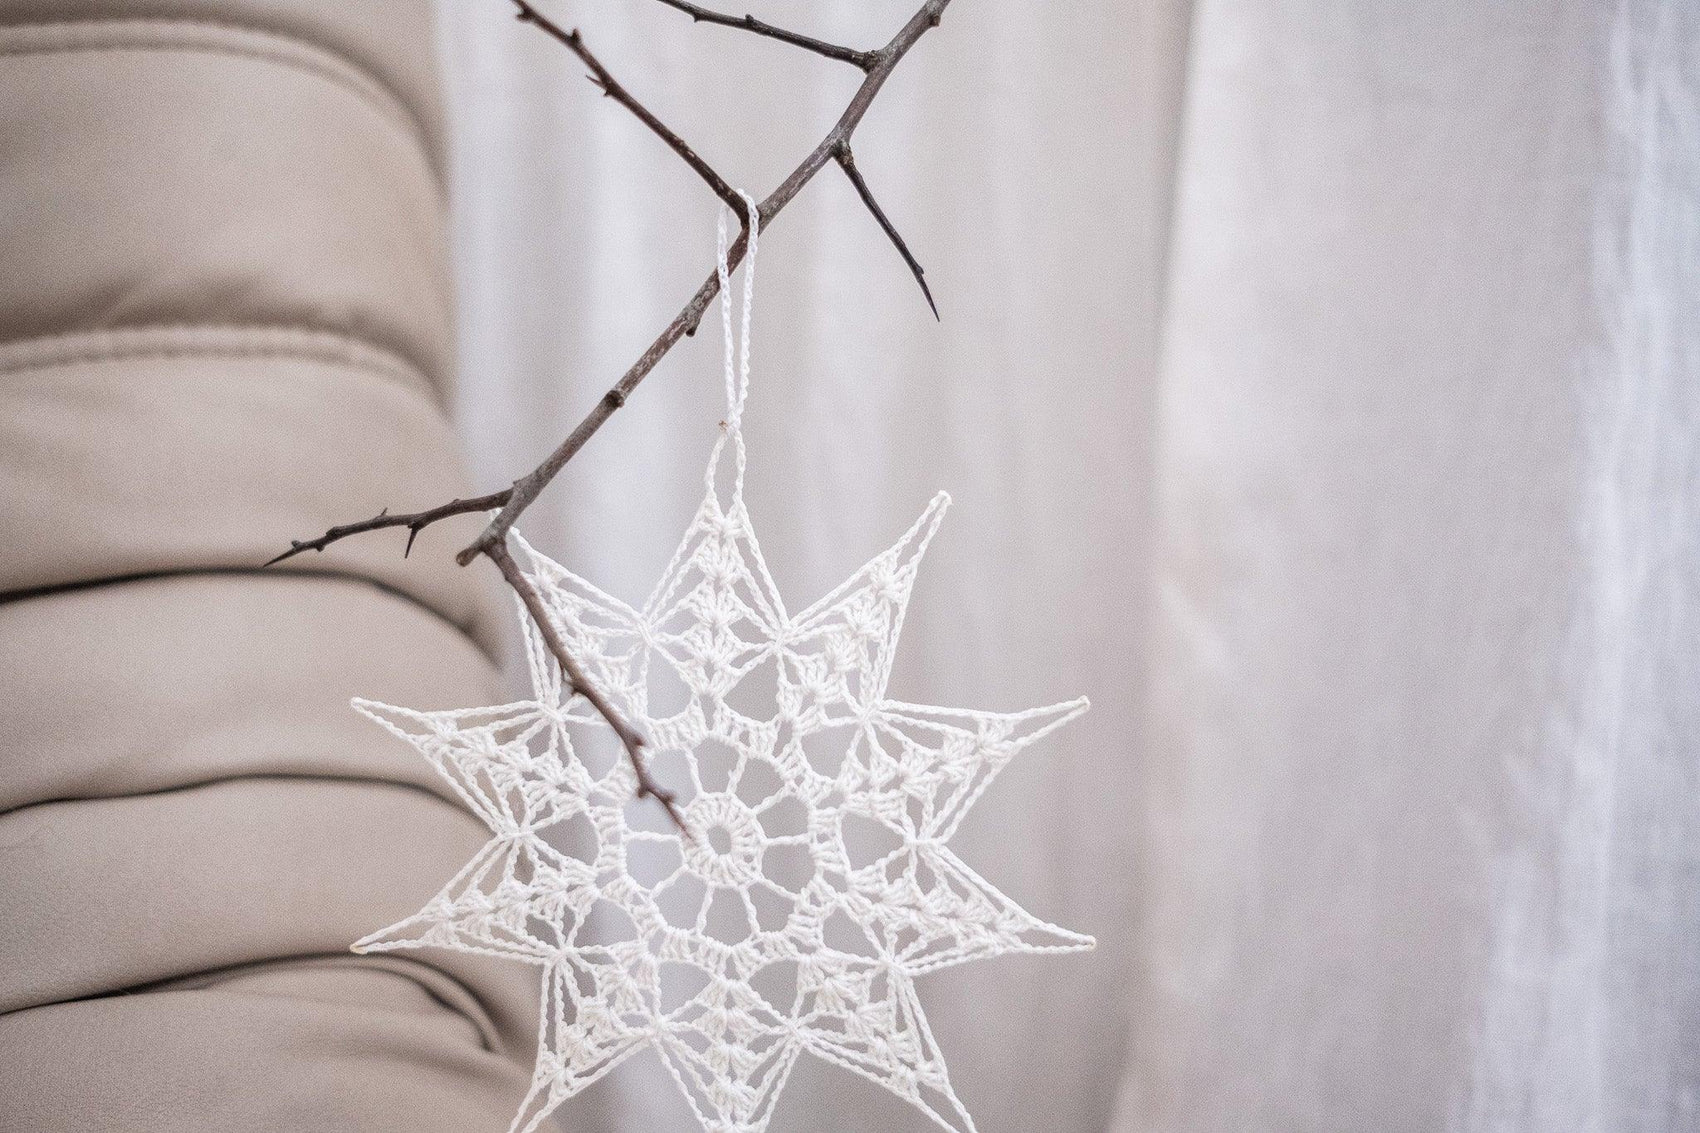 Handmade Crocheted Christmas Ornaments